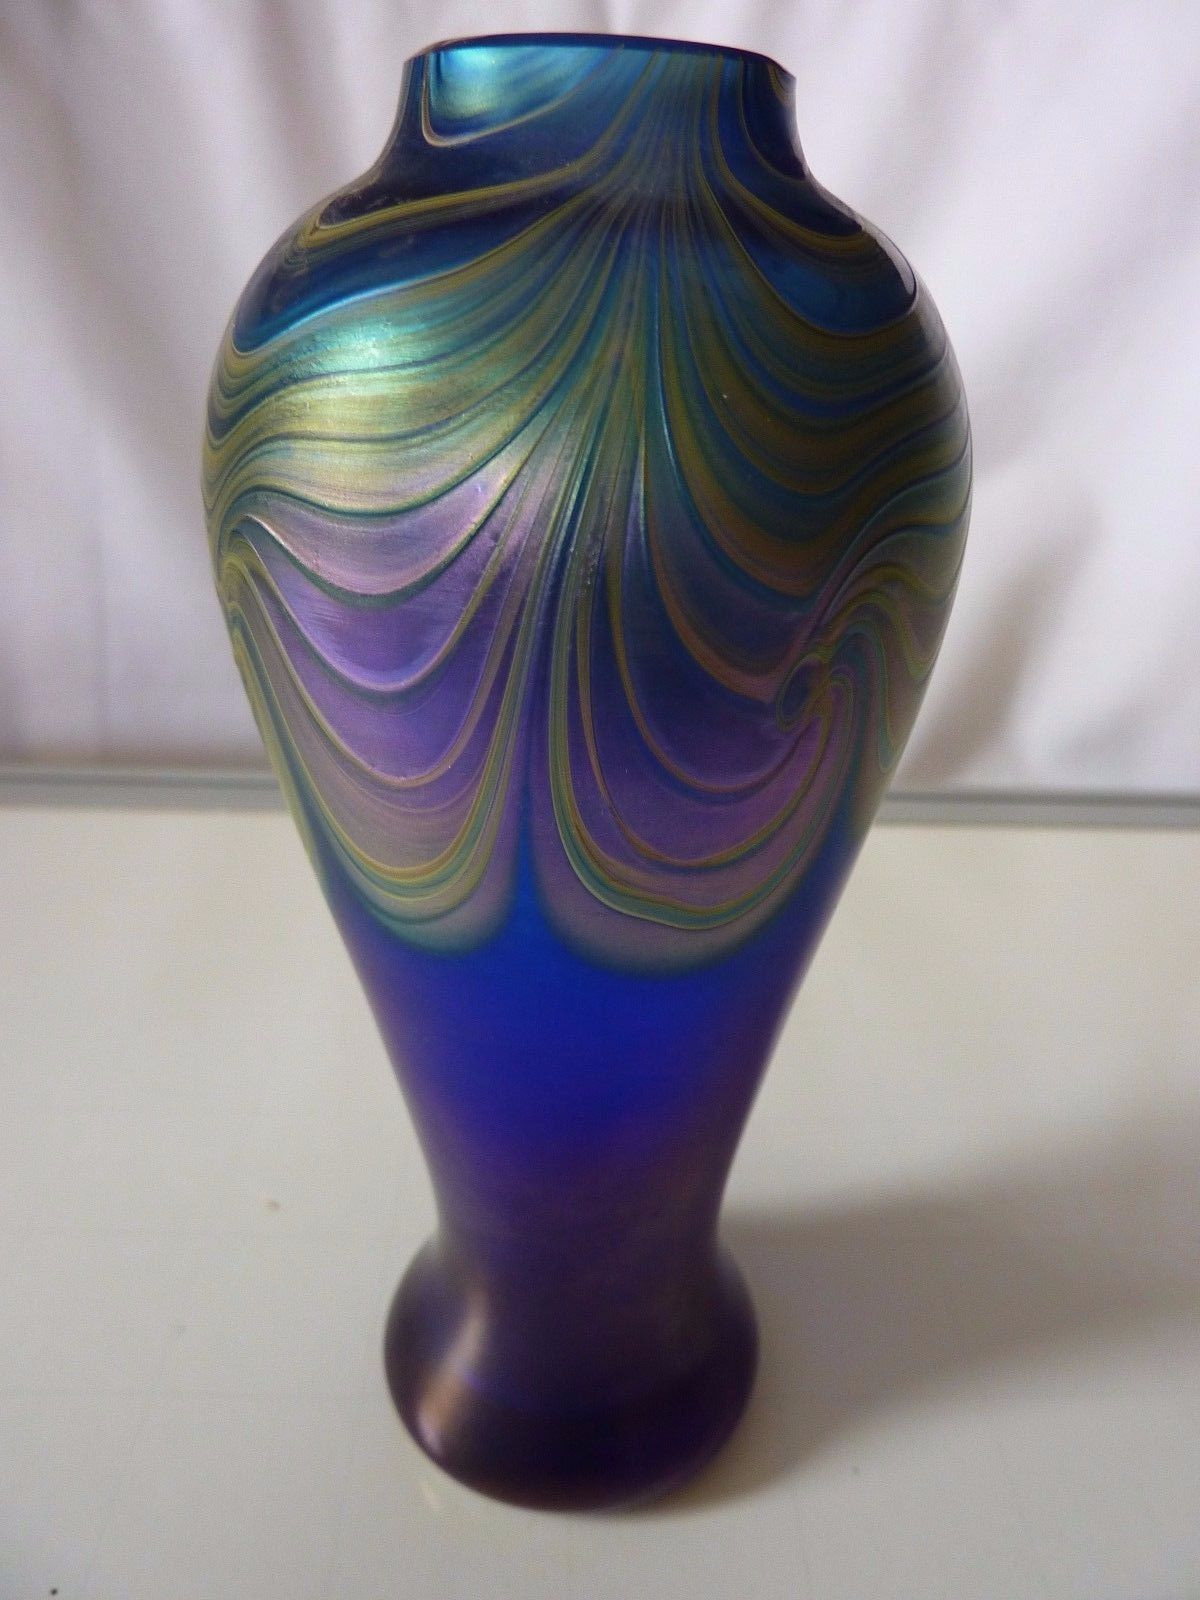 19 Fabulous Purple Swirl Vase 2023 free download purple swirl vase of okra glass vase blue and iridescent glassies british okra with okra glass vase blue and iridescent ebay